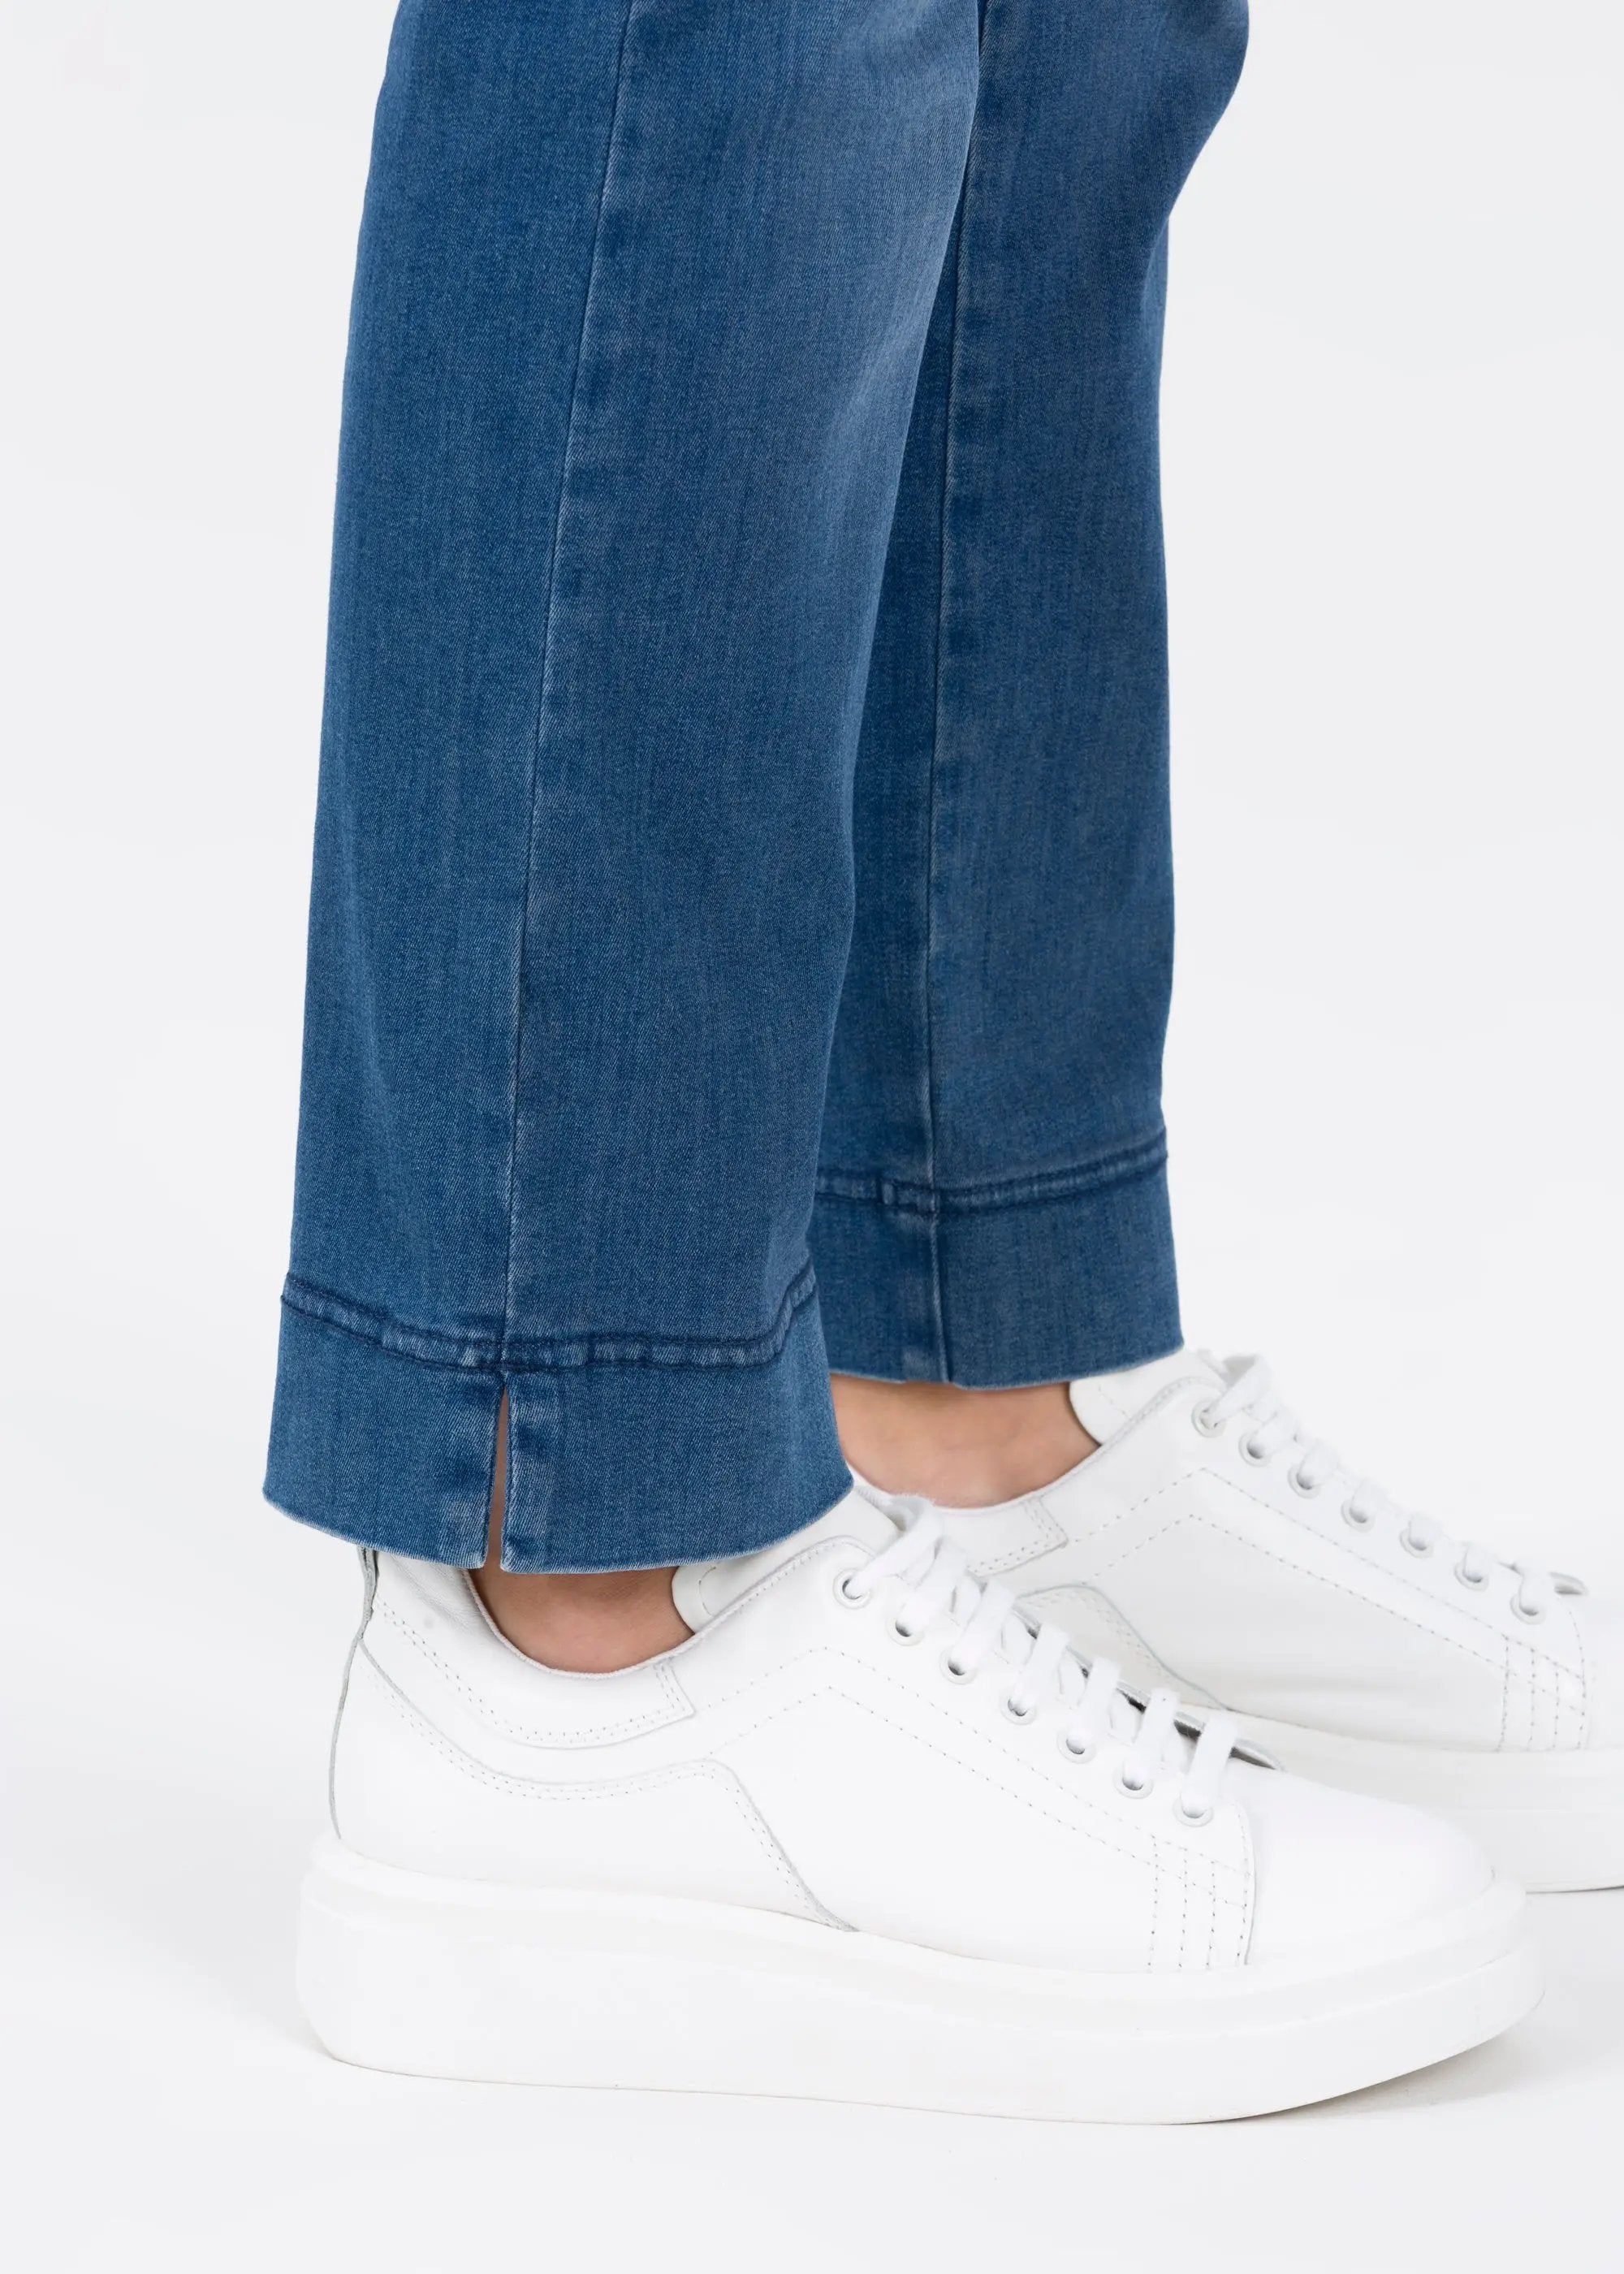 Jeans Ina mit geradem Bein in Blau | Stretchjeans